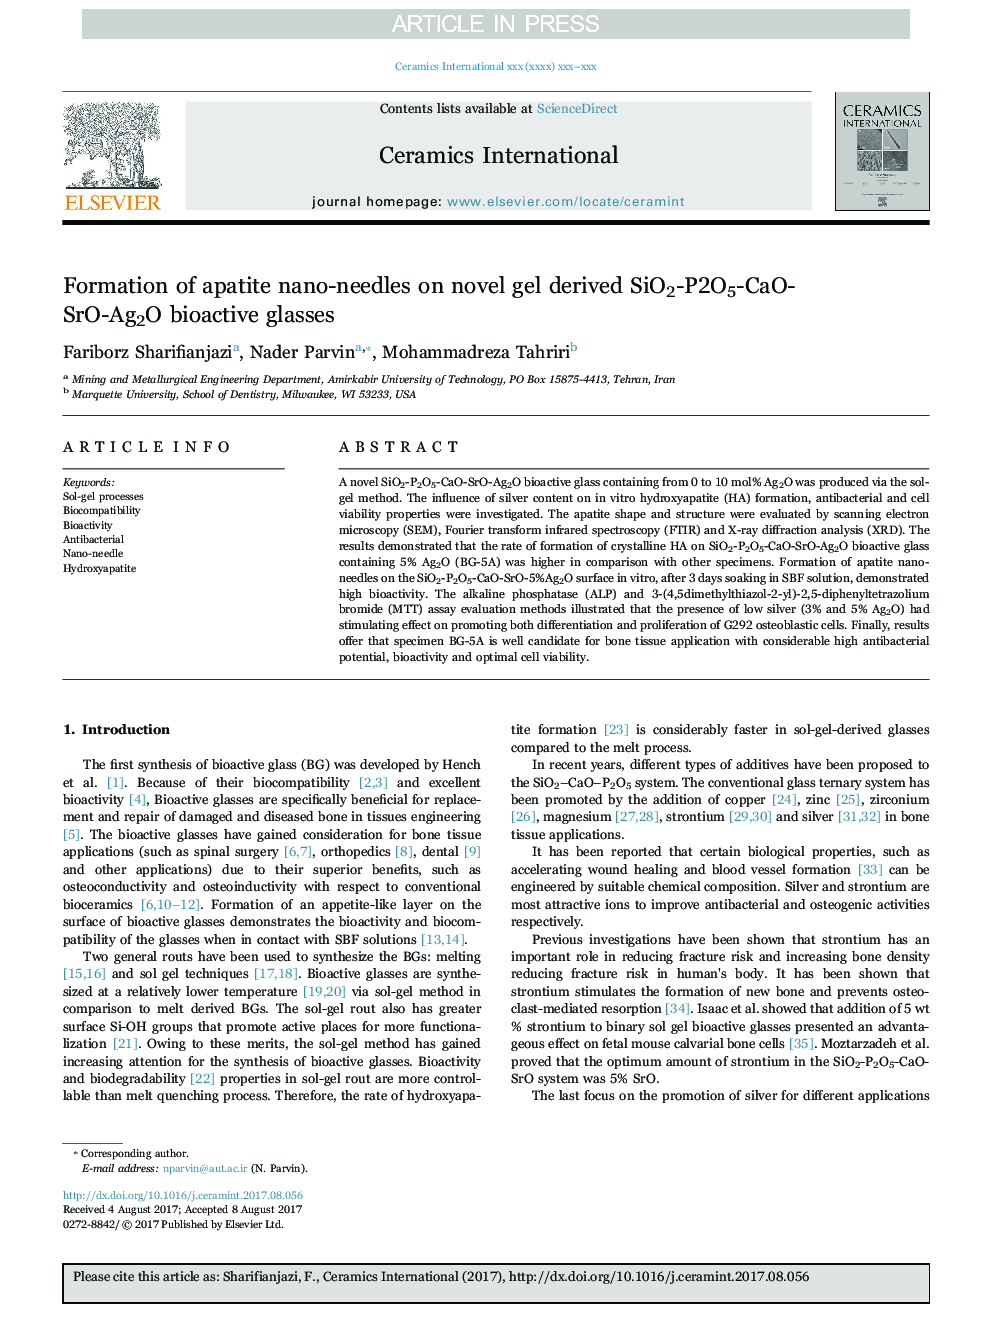 Formation of apatite nano-needles on novel gel derived SiO2-P2O5-CaO-SrO-Ag2O bioactive glasses